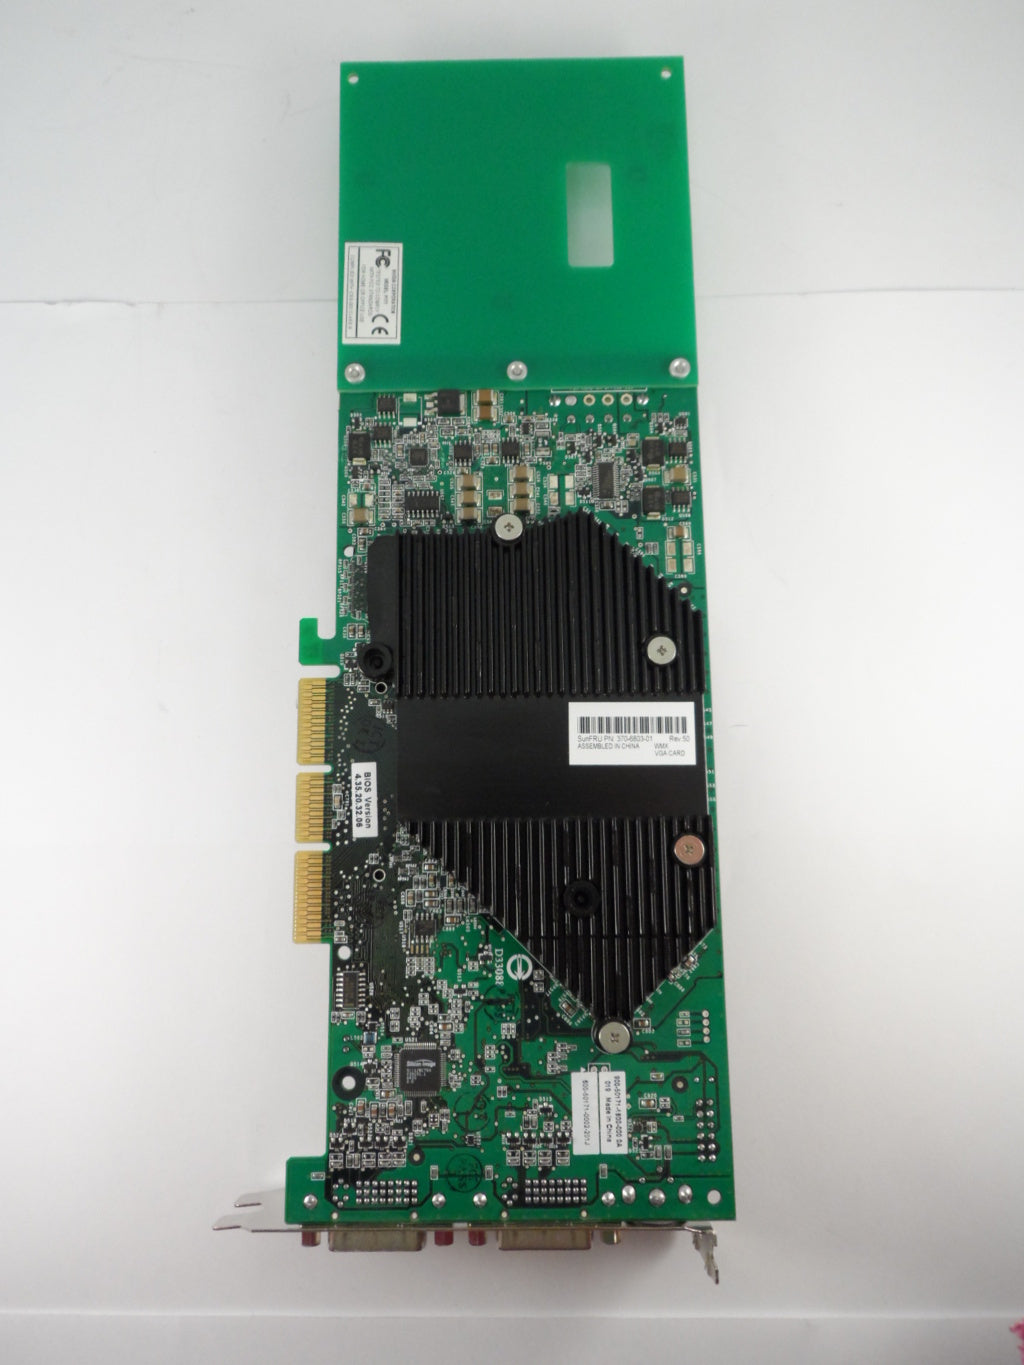 180-10588-0002-A01 - nVIDIA Quadro FX1700 512MB PCI-E x16 Video Card - Refurbished